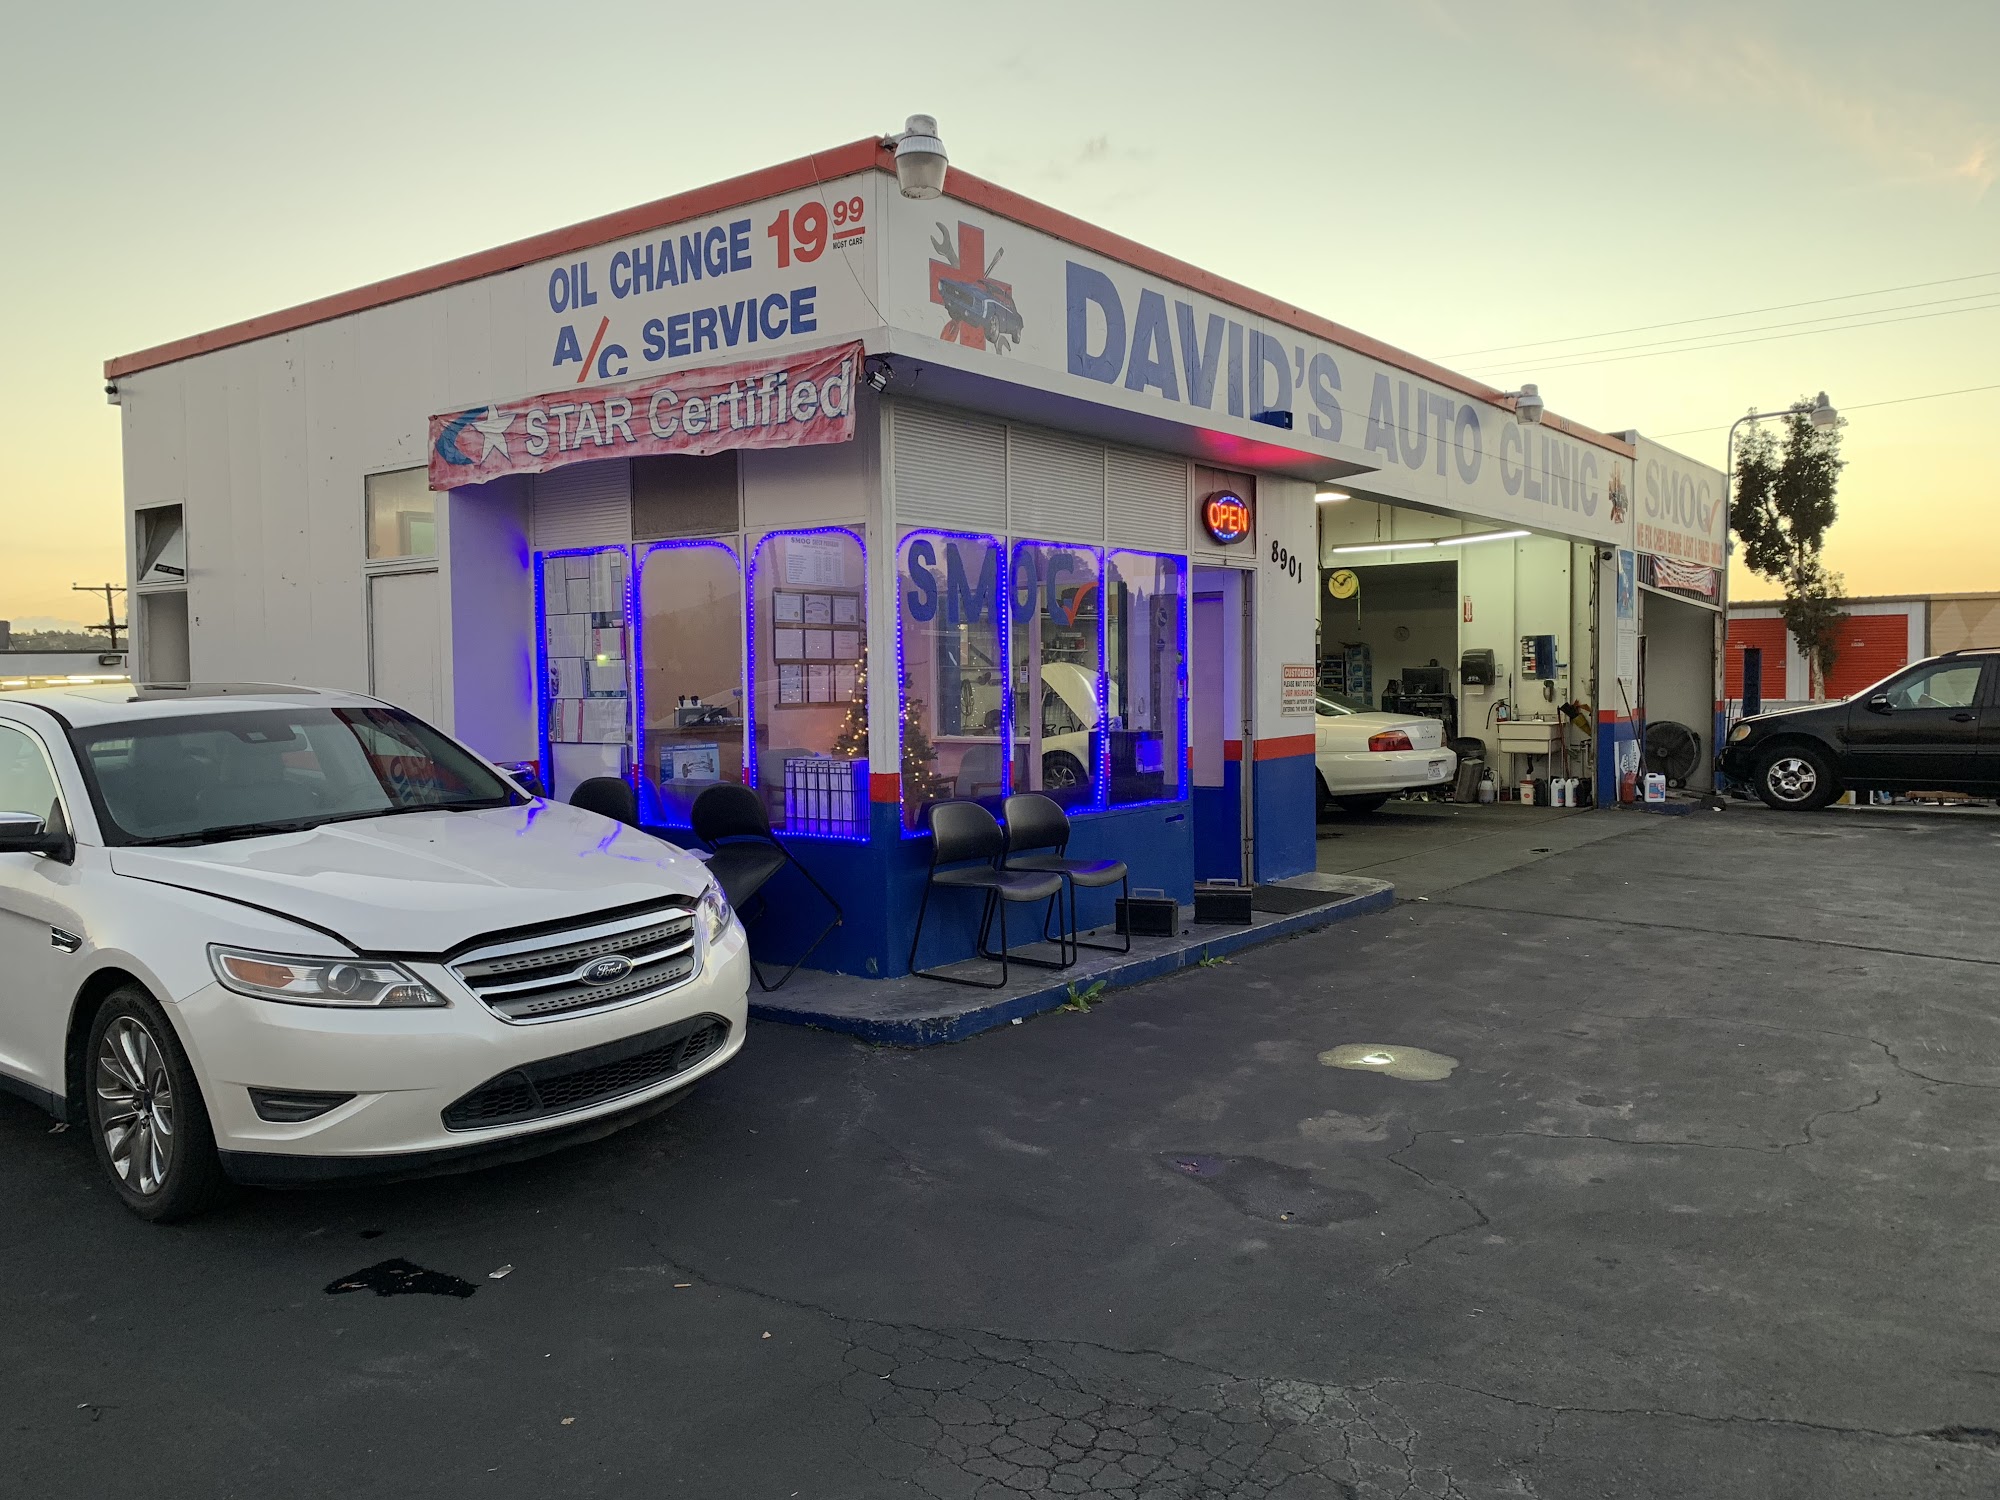 David's Auto Clinic